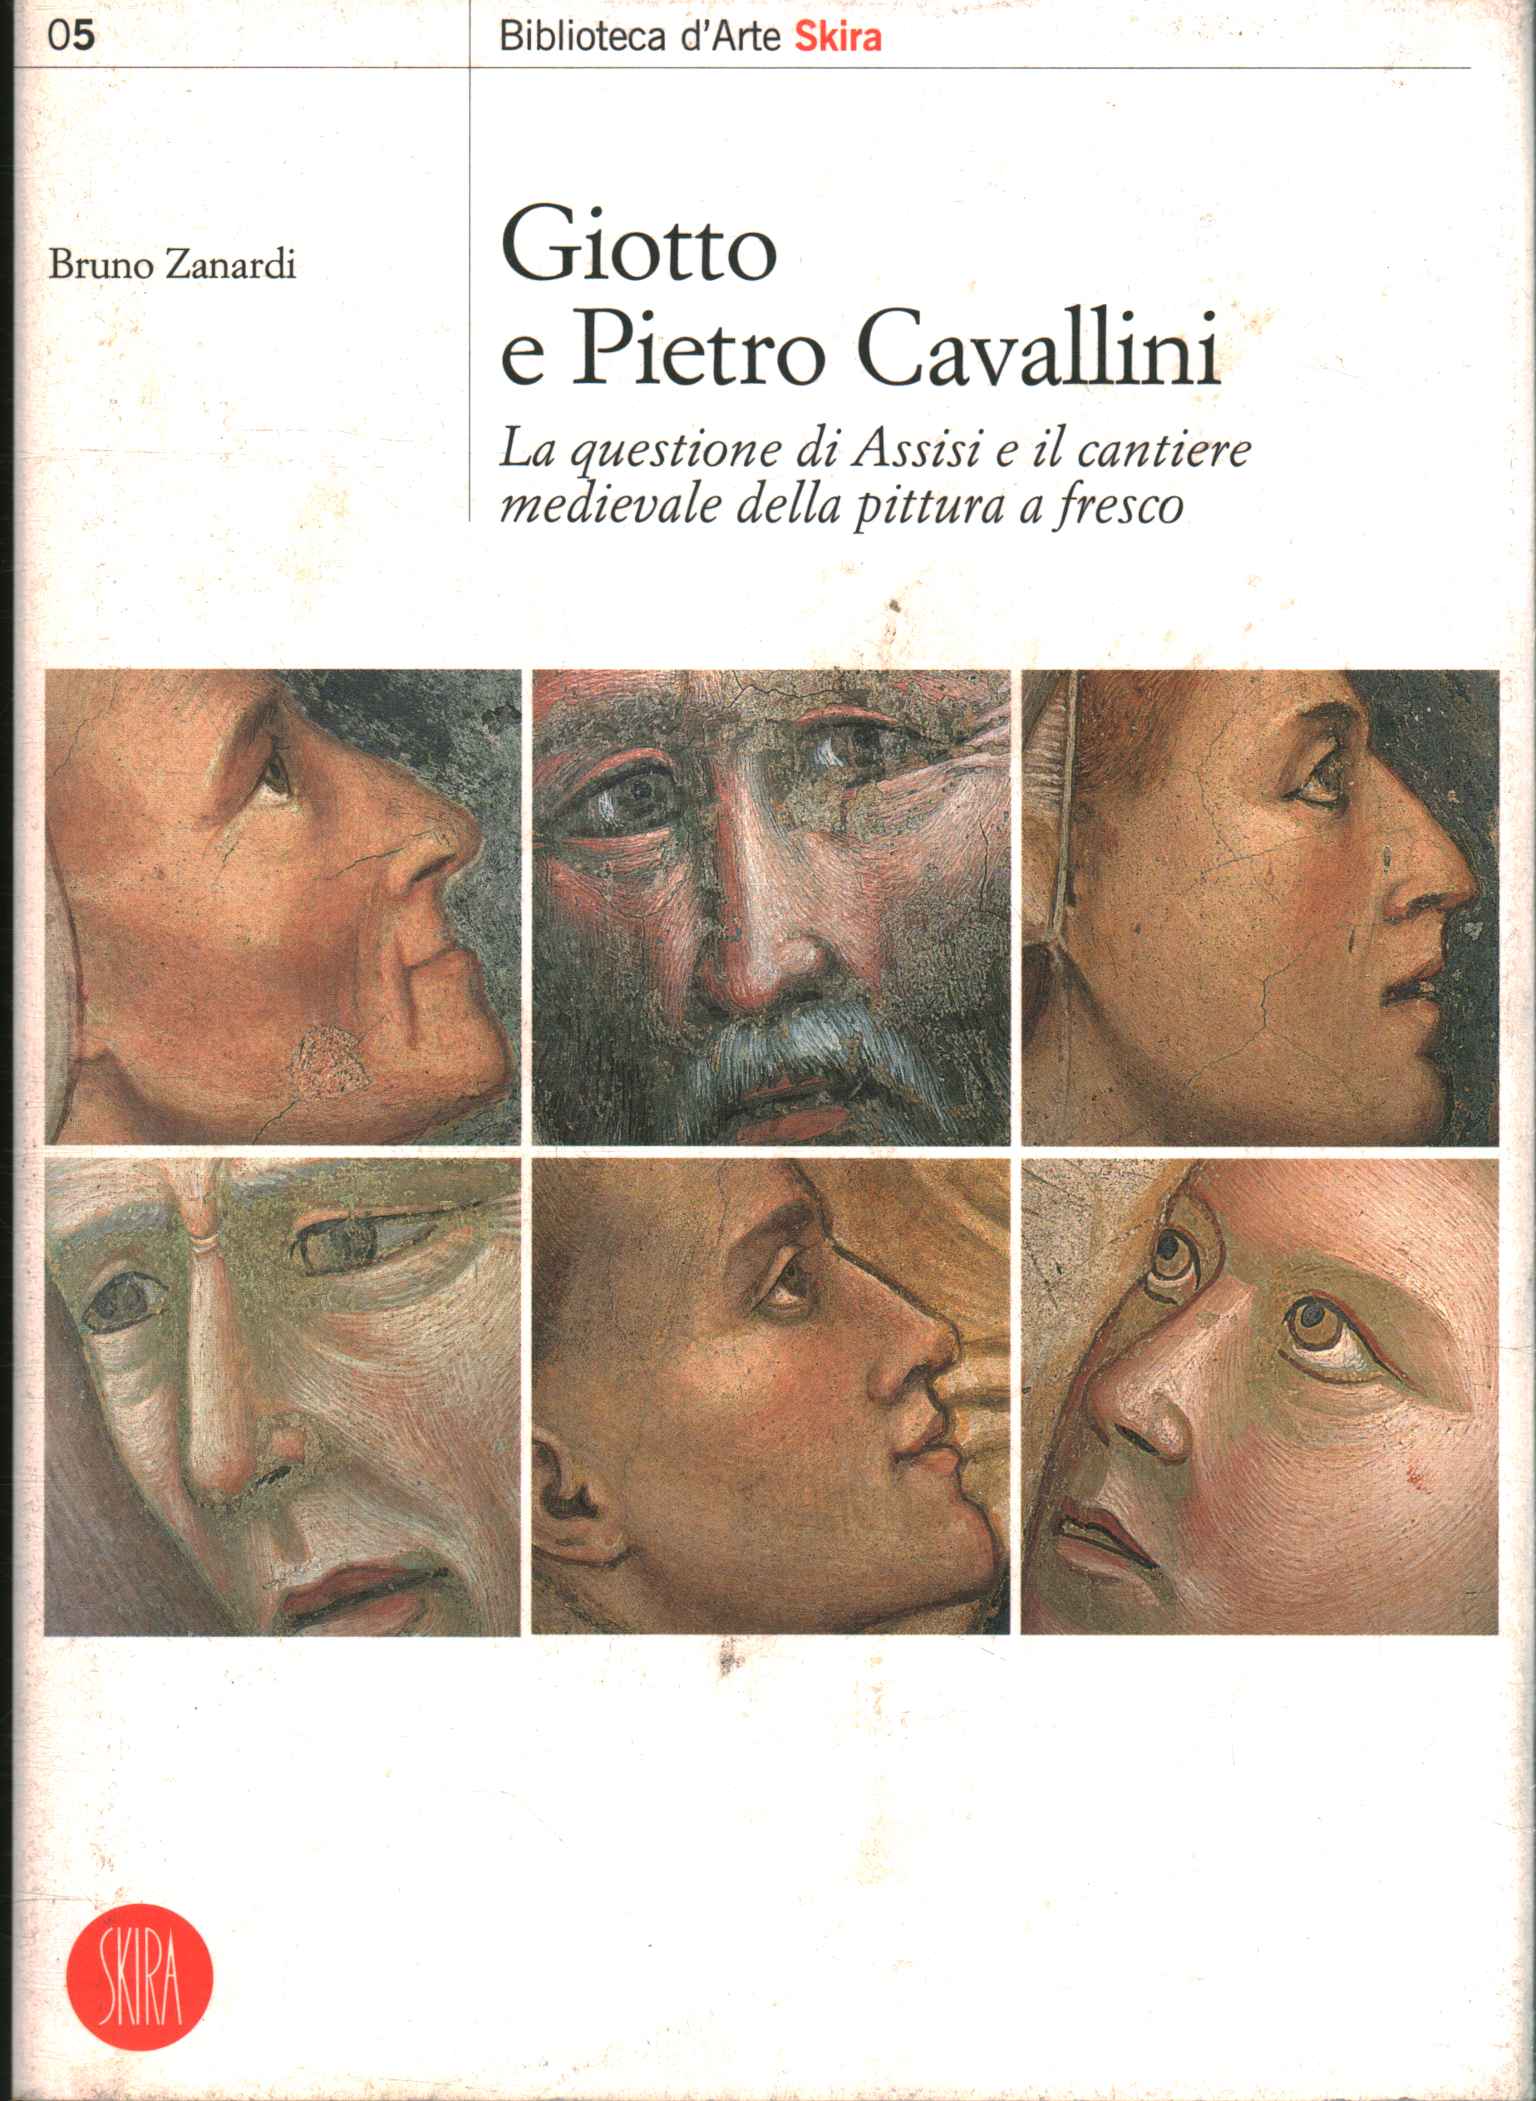 Giotto y Pietro Cavallini